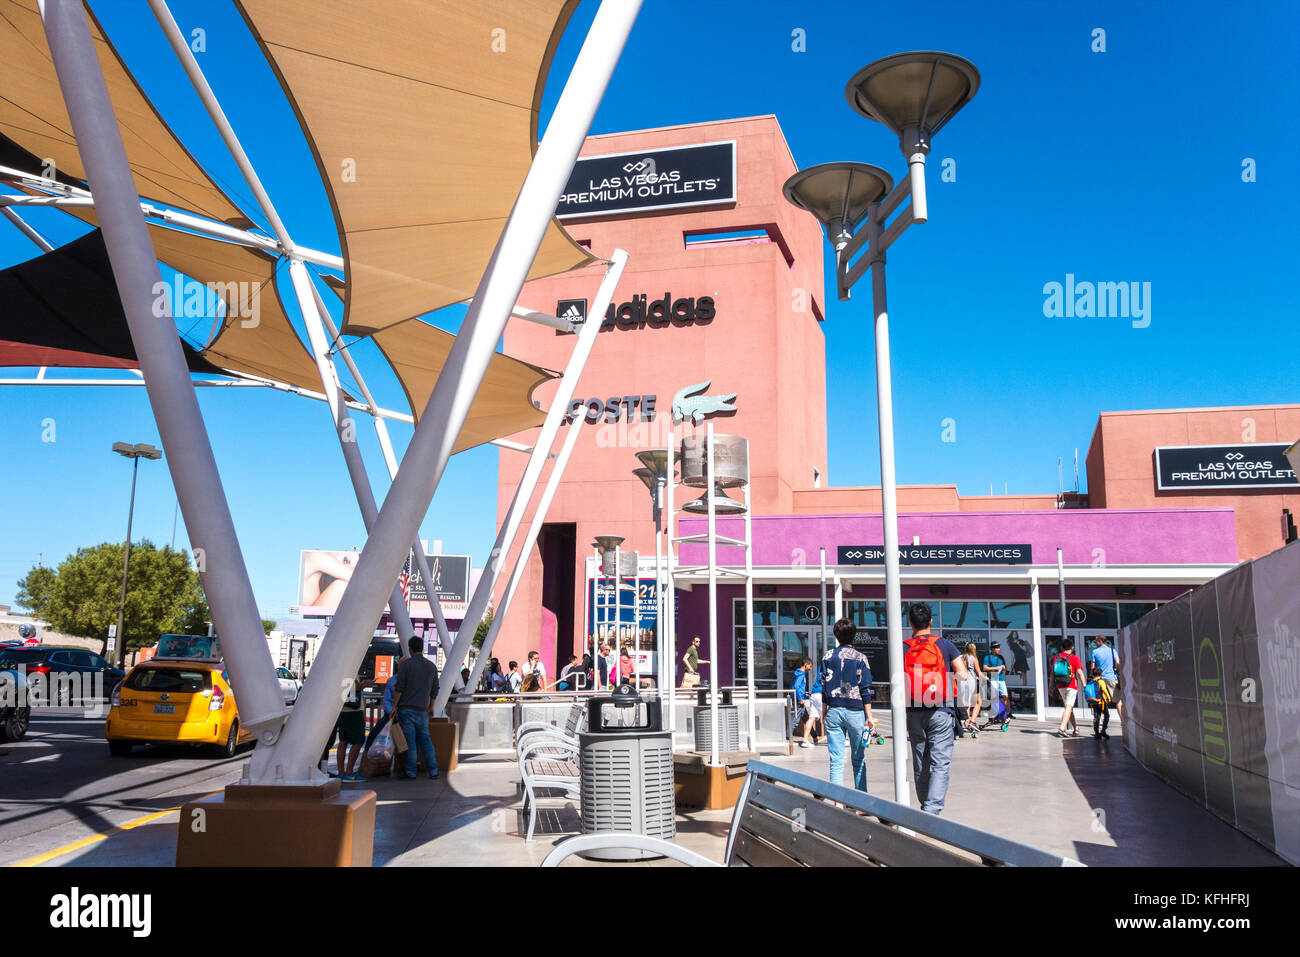 Las Vegas Premium Outlets Nord Shopping Mall Stockfotografie - Alamy